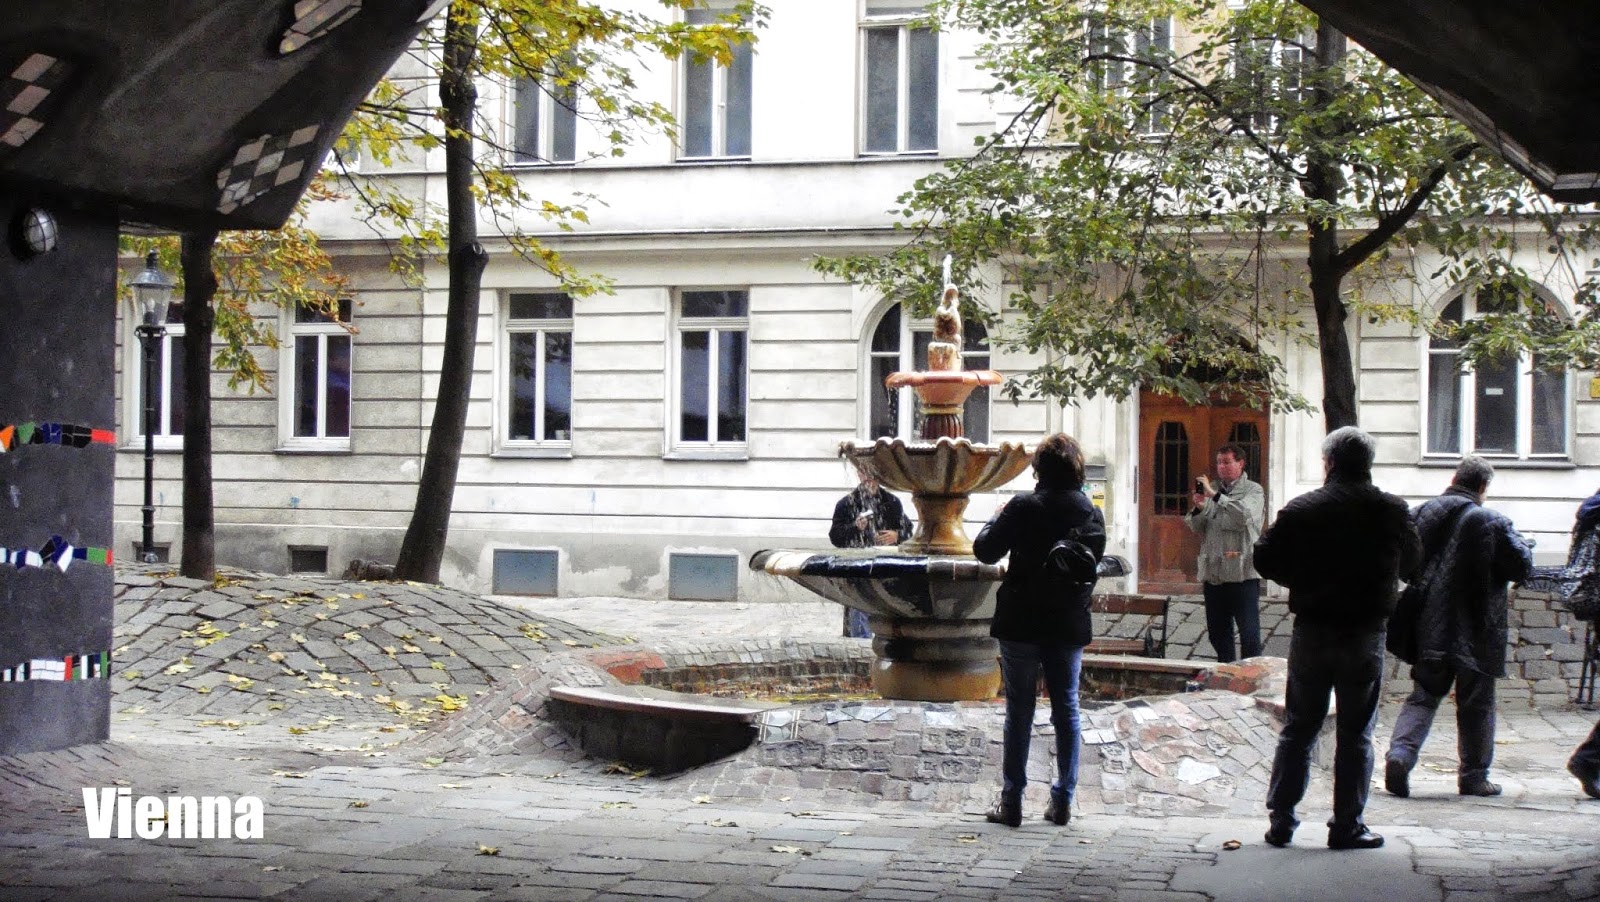 Hundertwasserhaus, Viena, Elisa N, Blog de Viajes, Lifestyle, Travel